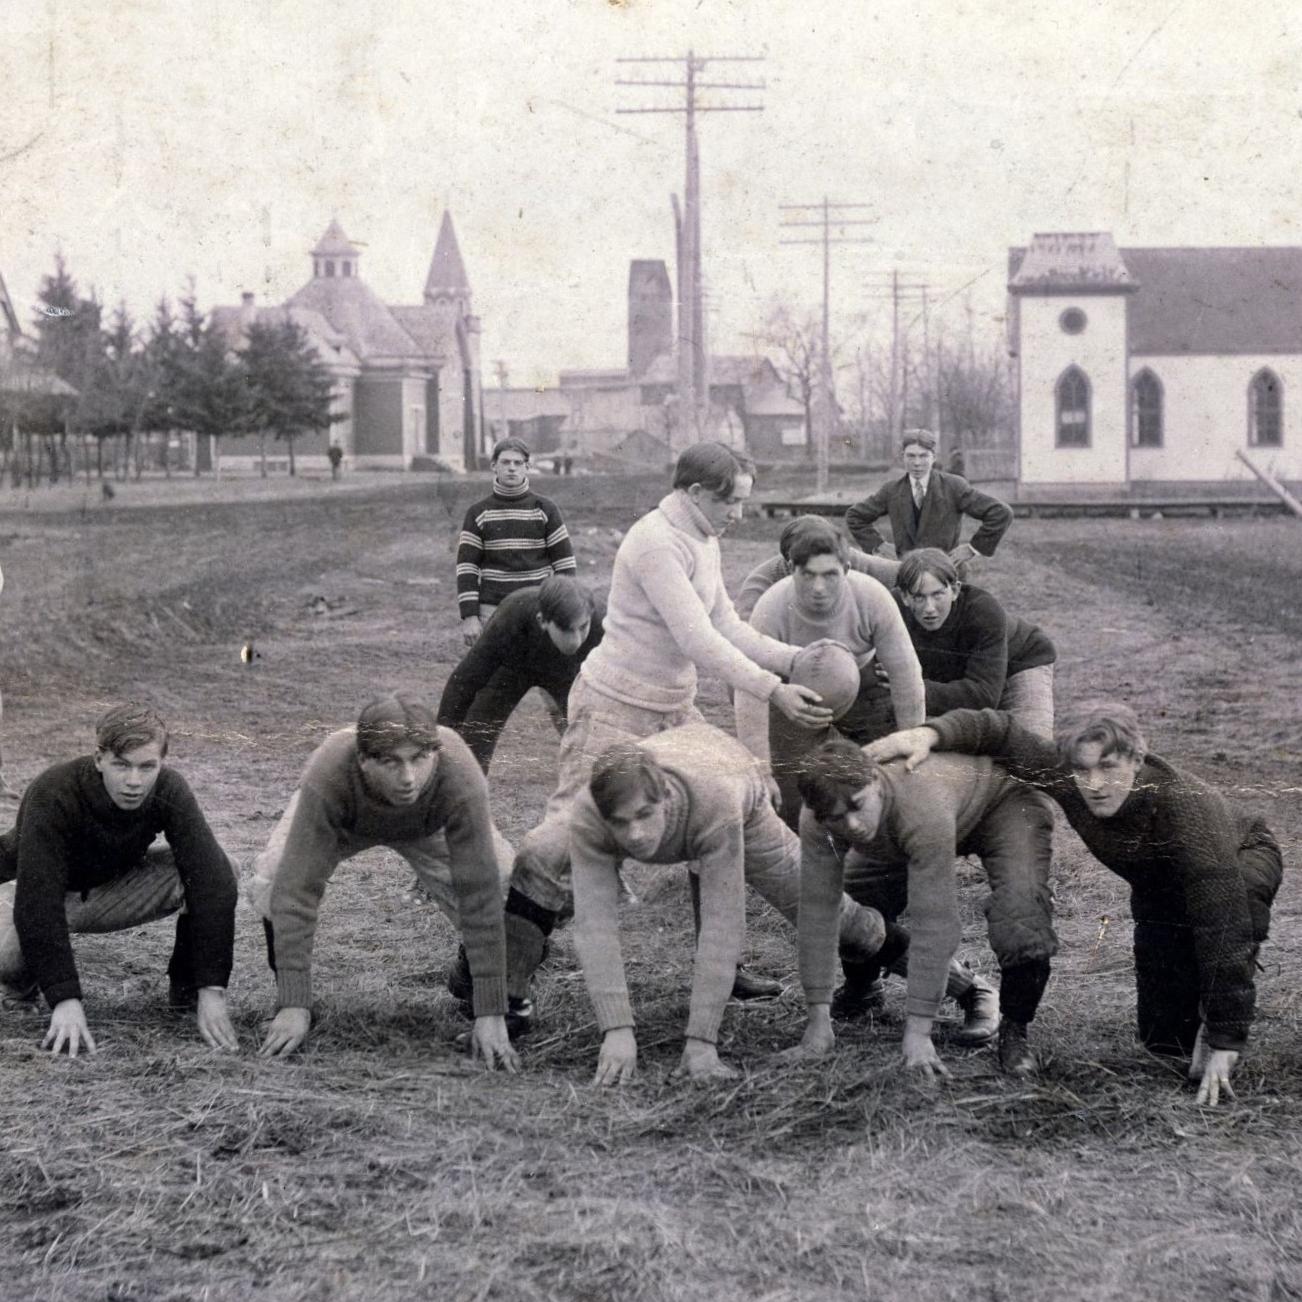 First football team of Thief River Falls, c. 1900